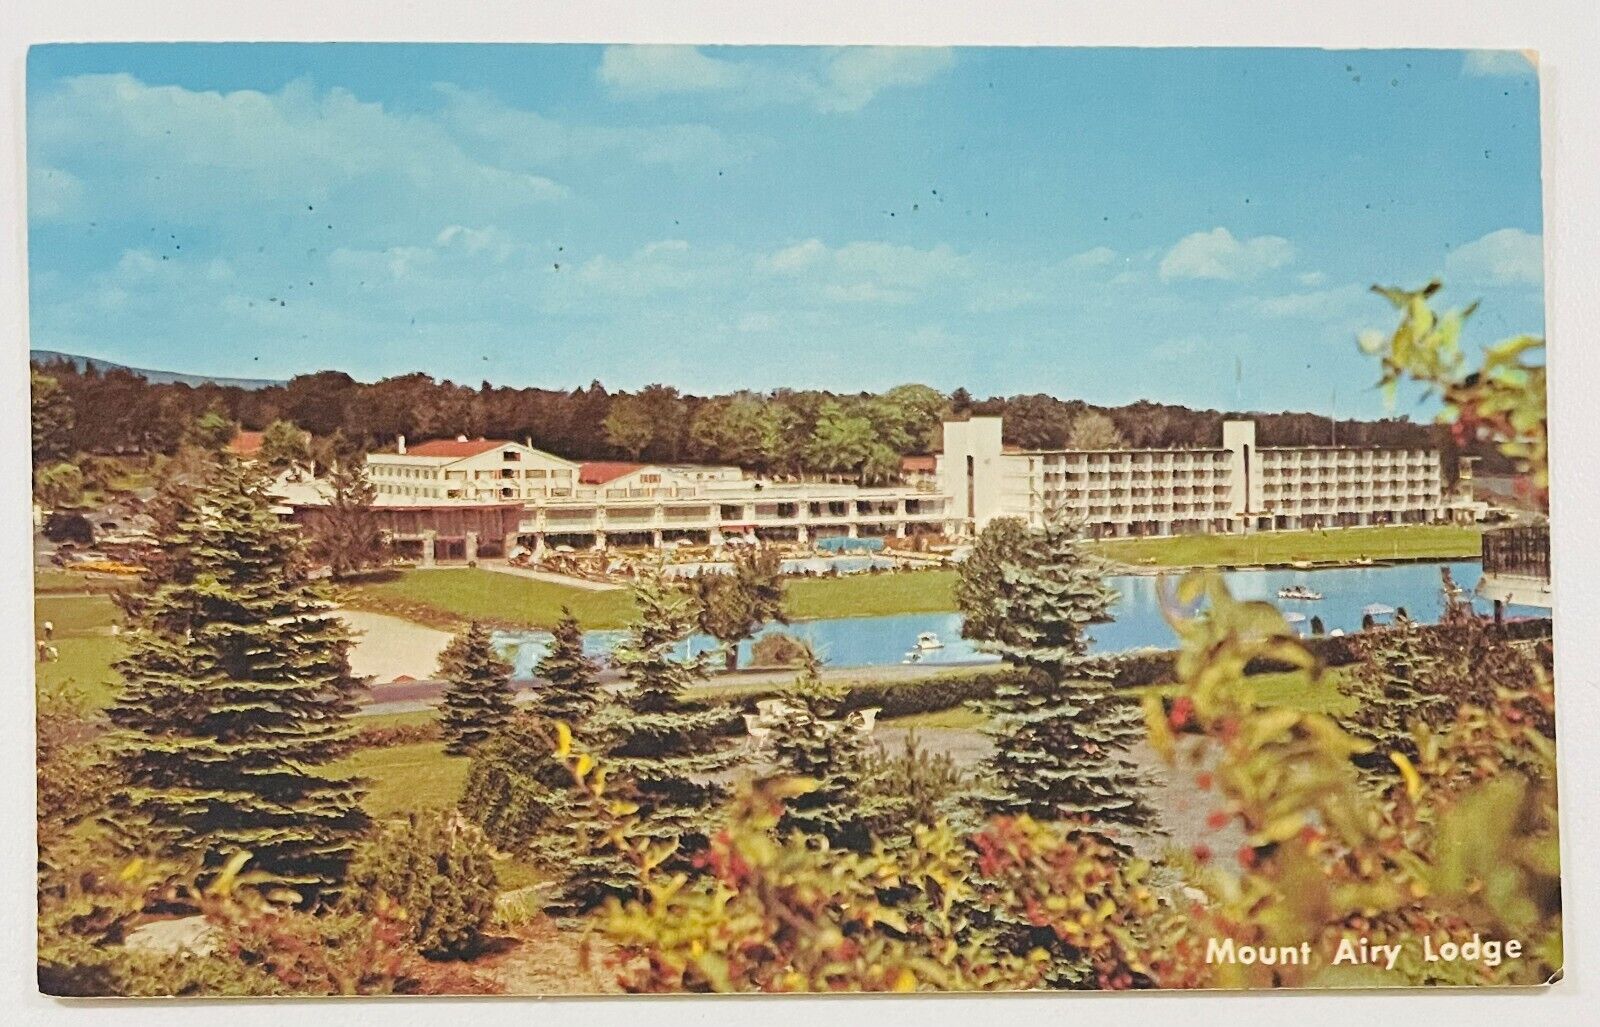 Mt. Pocono, PA/Mount Airy Lodge Vintage Postcard